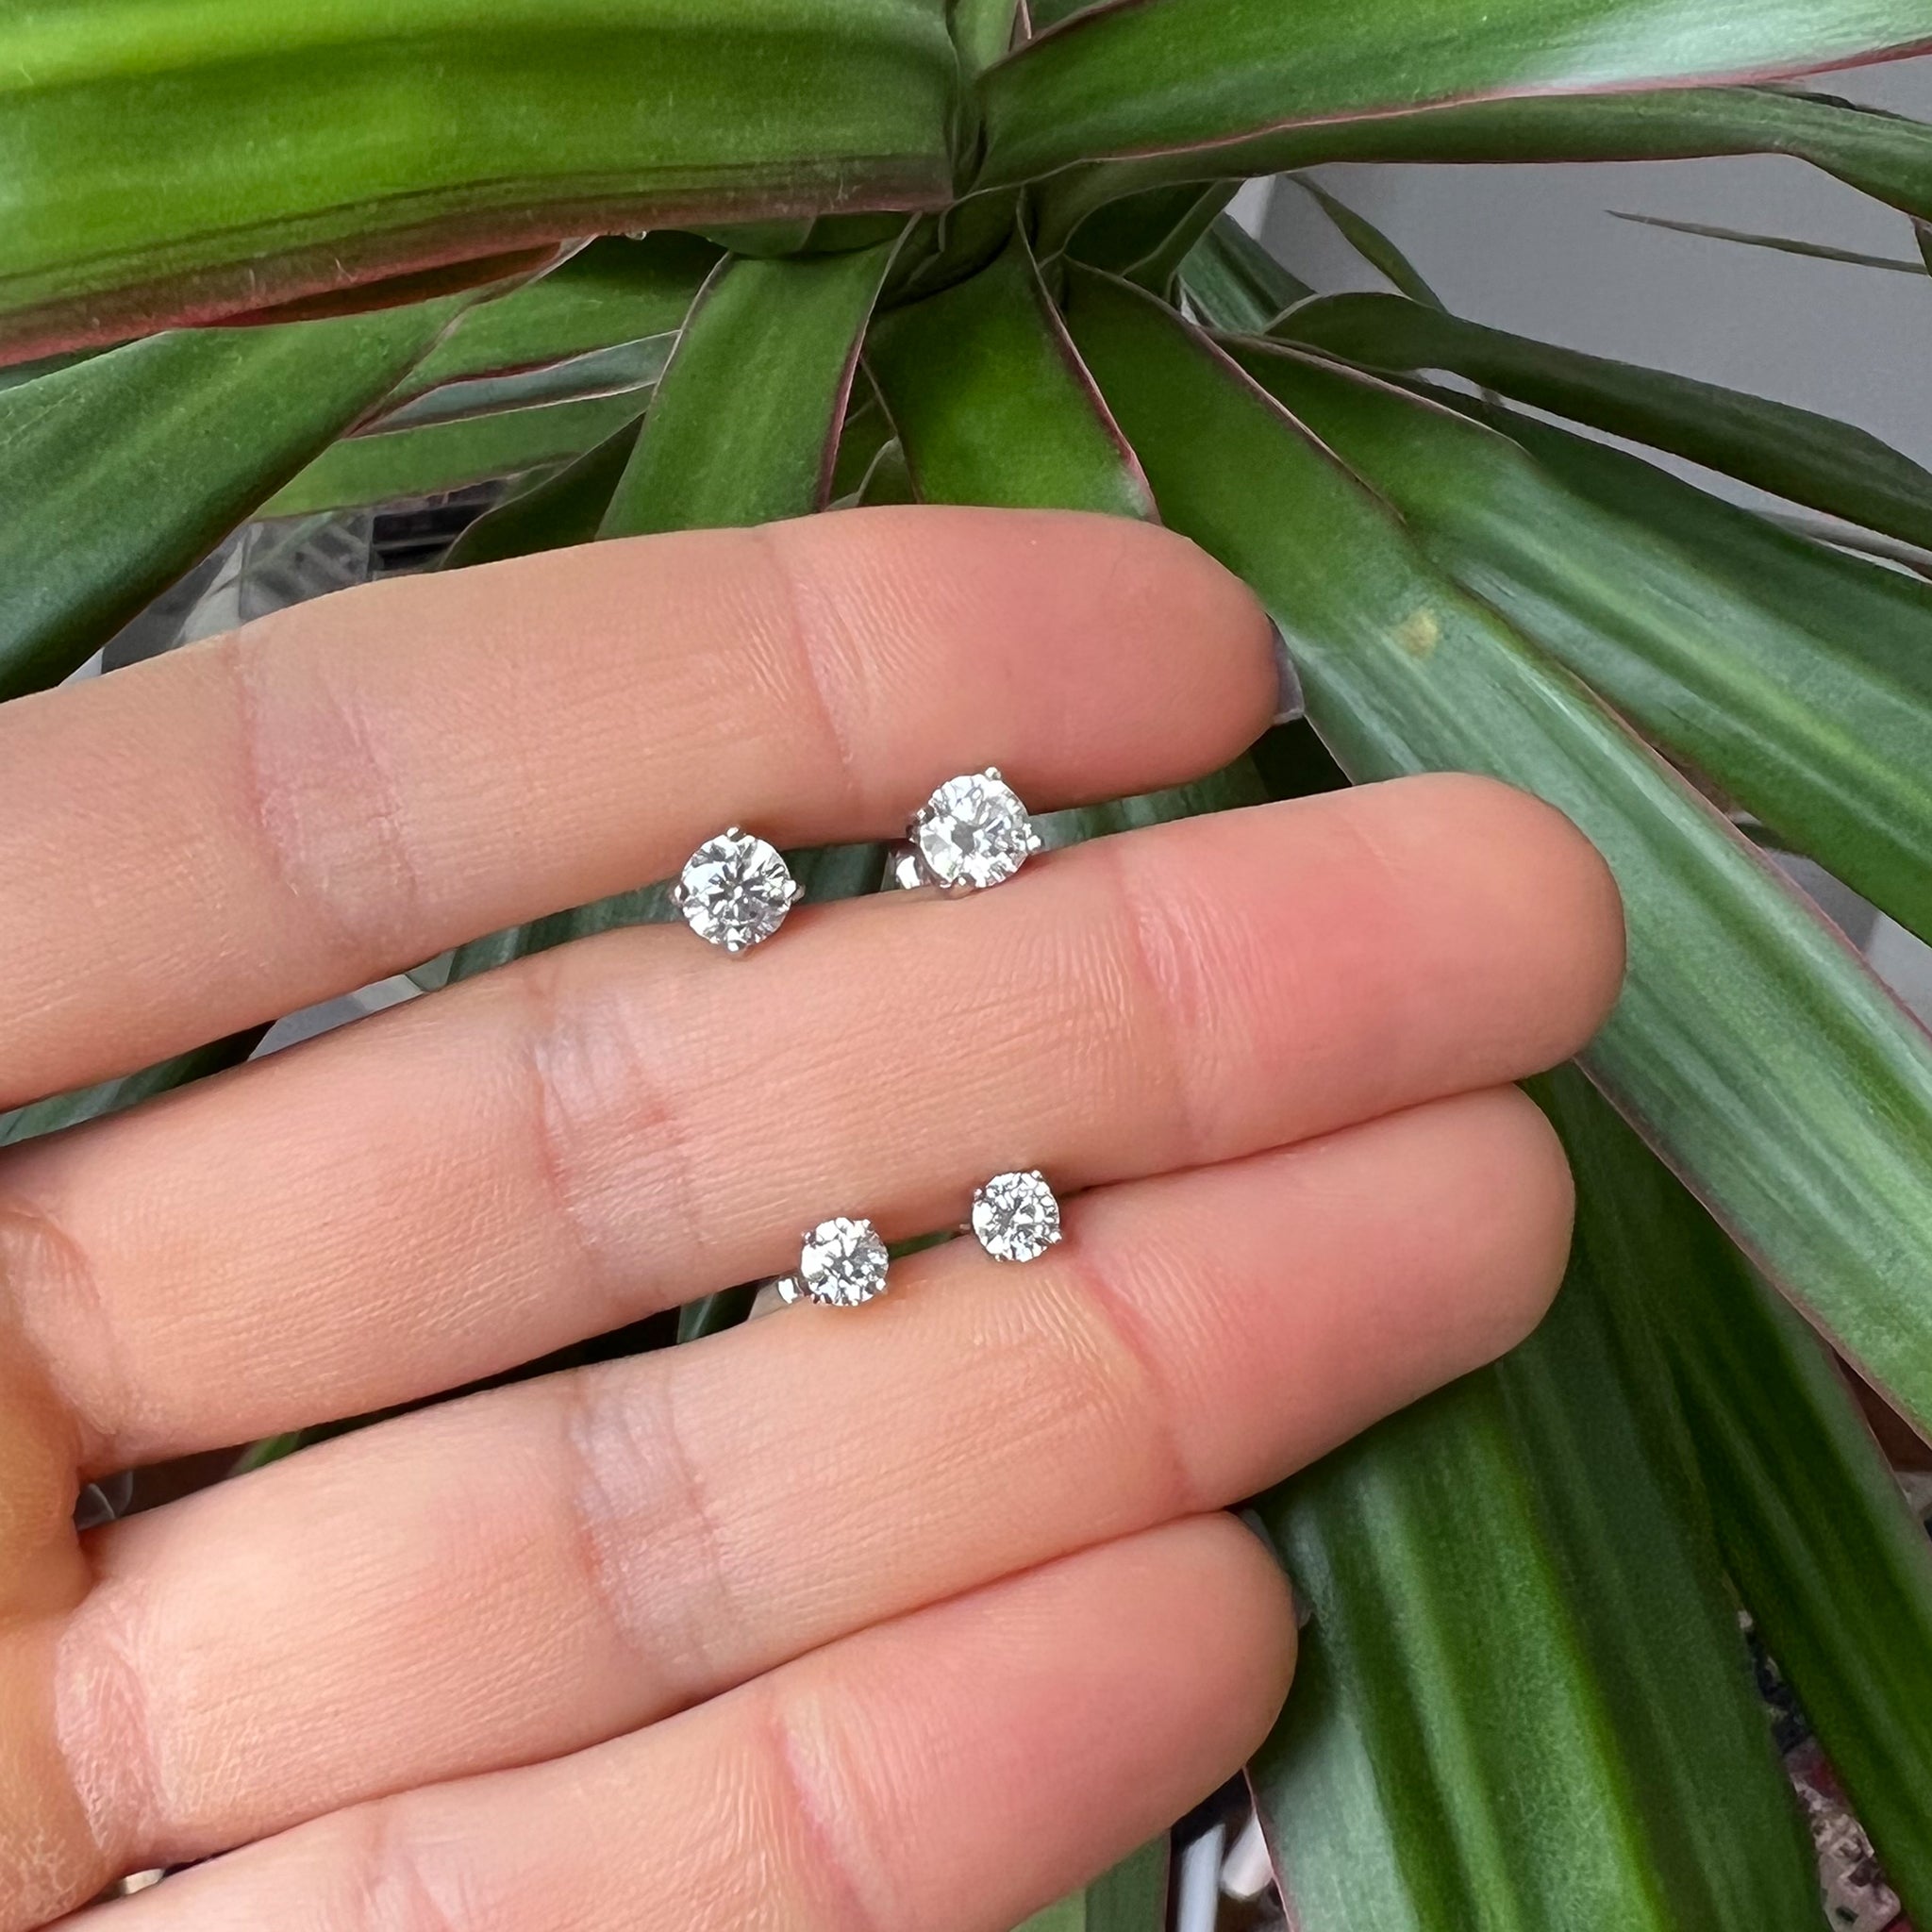 Stylish lab grown diamond stud earrings by Lico Jewelry, Montreal.